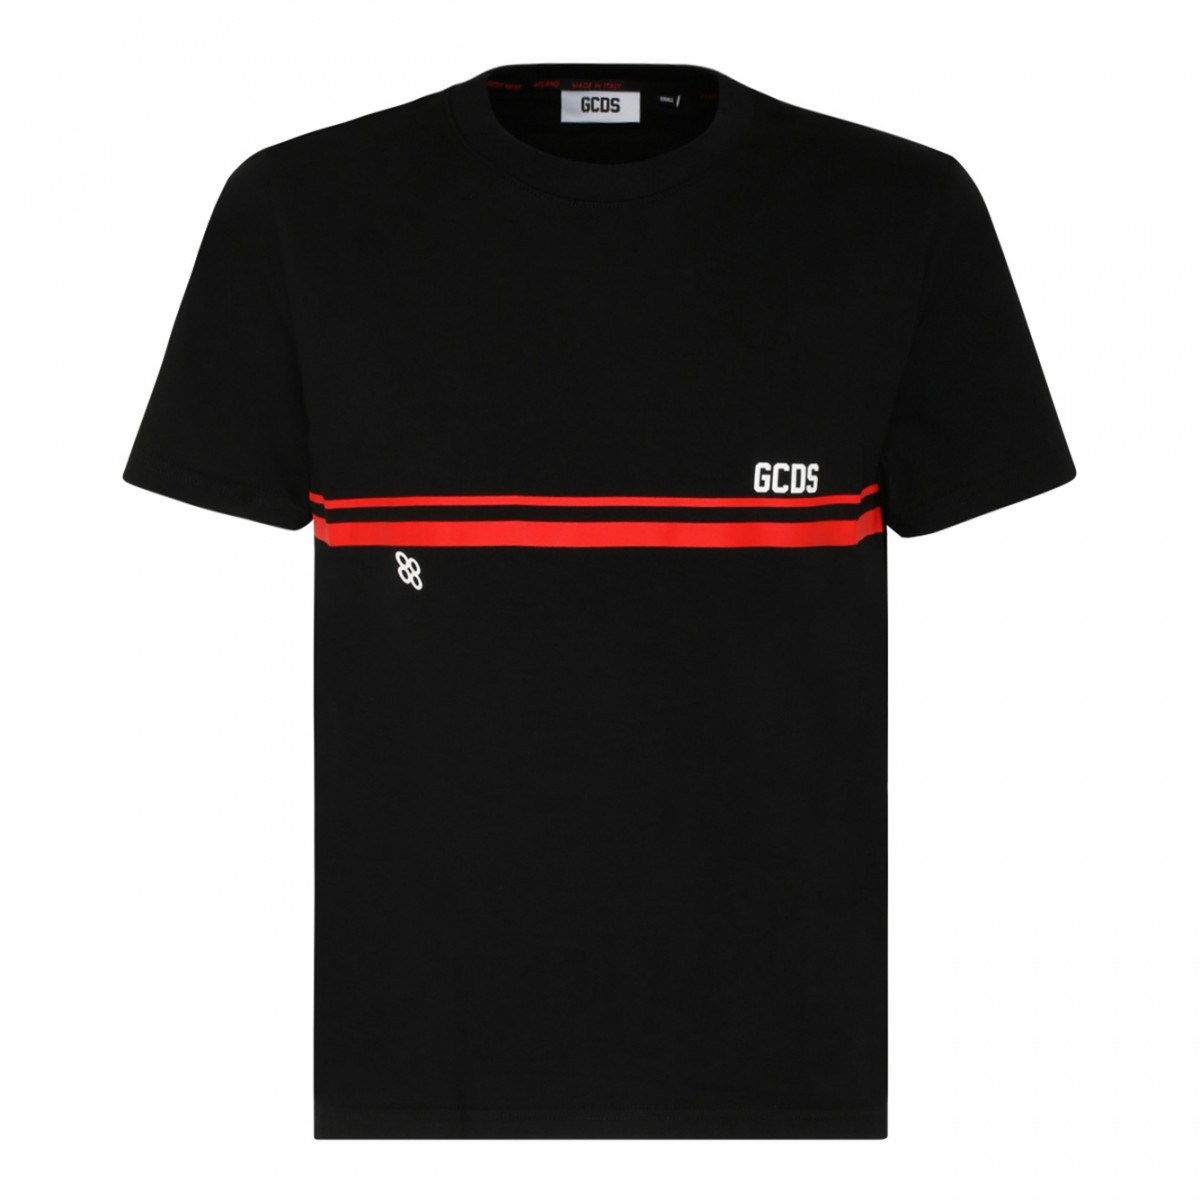 Gcds Black, Red and White Cotton Striped Logo Print T-Shirt.